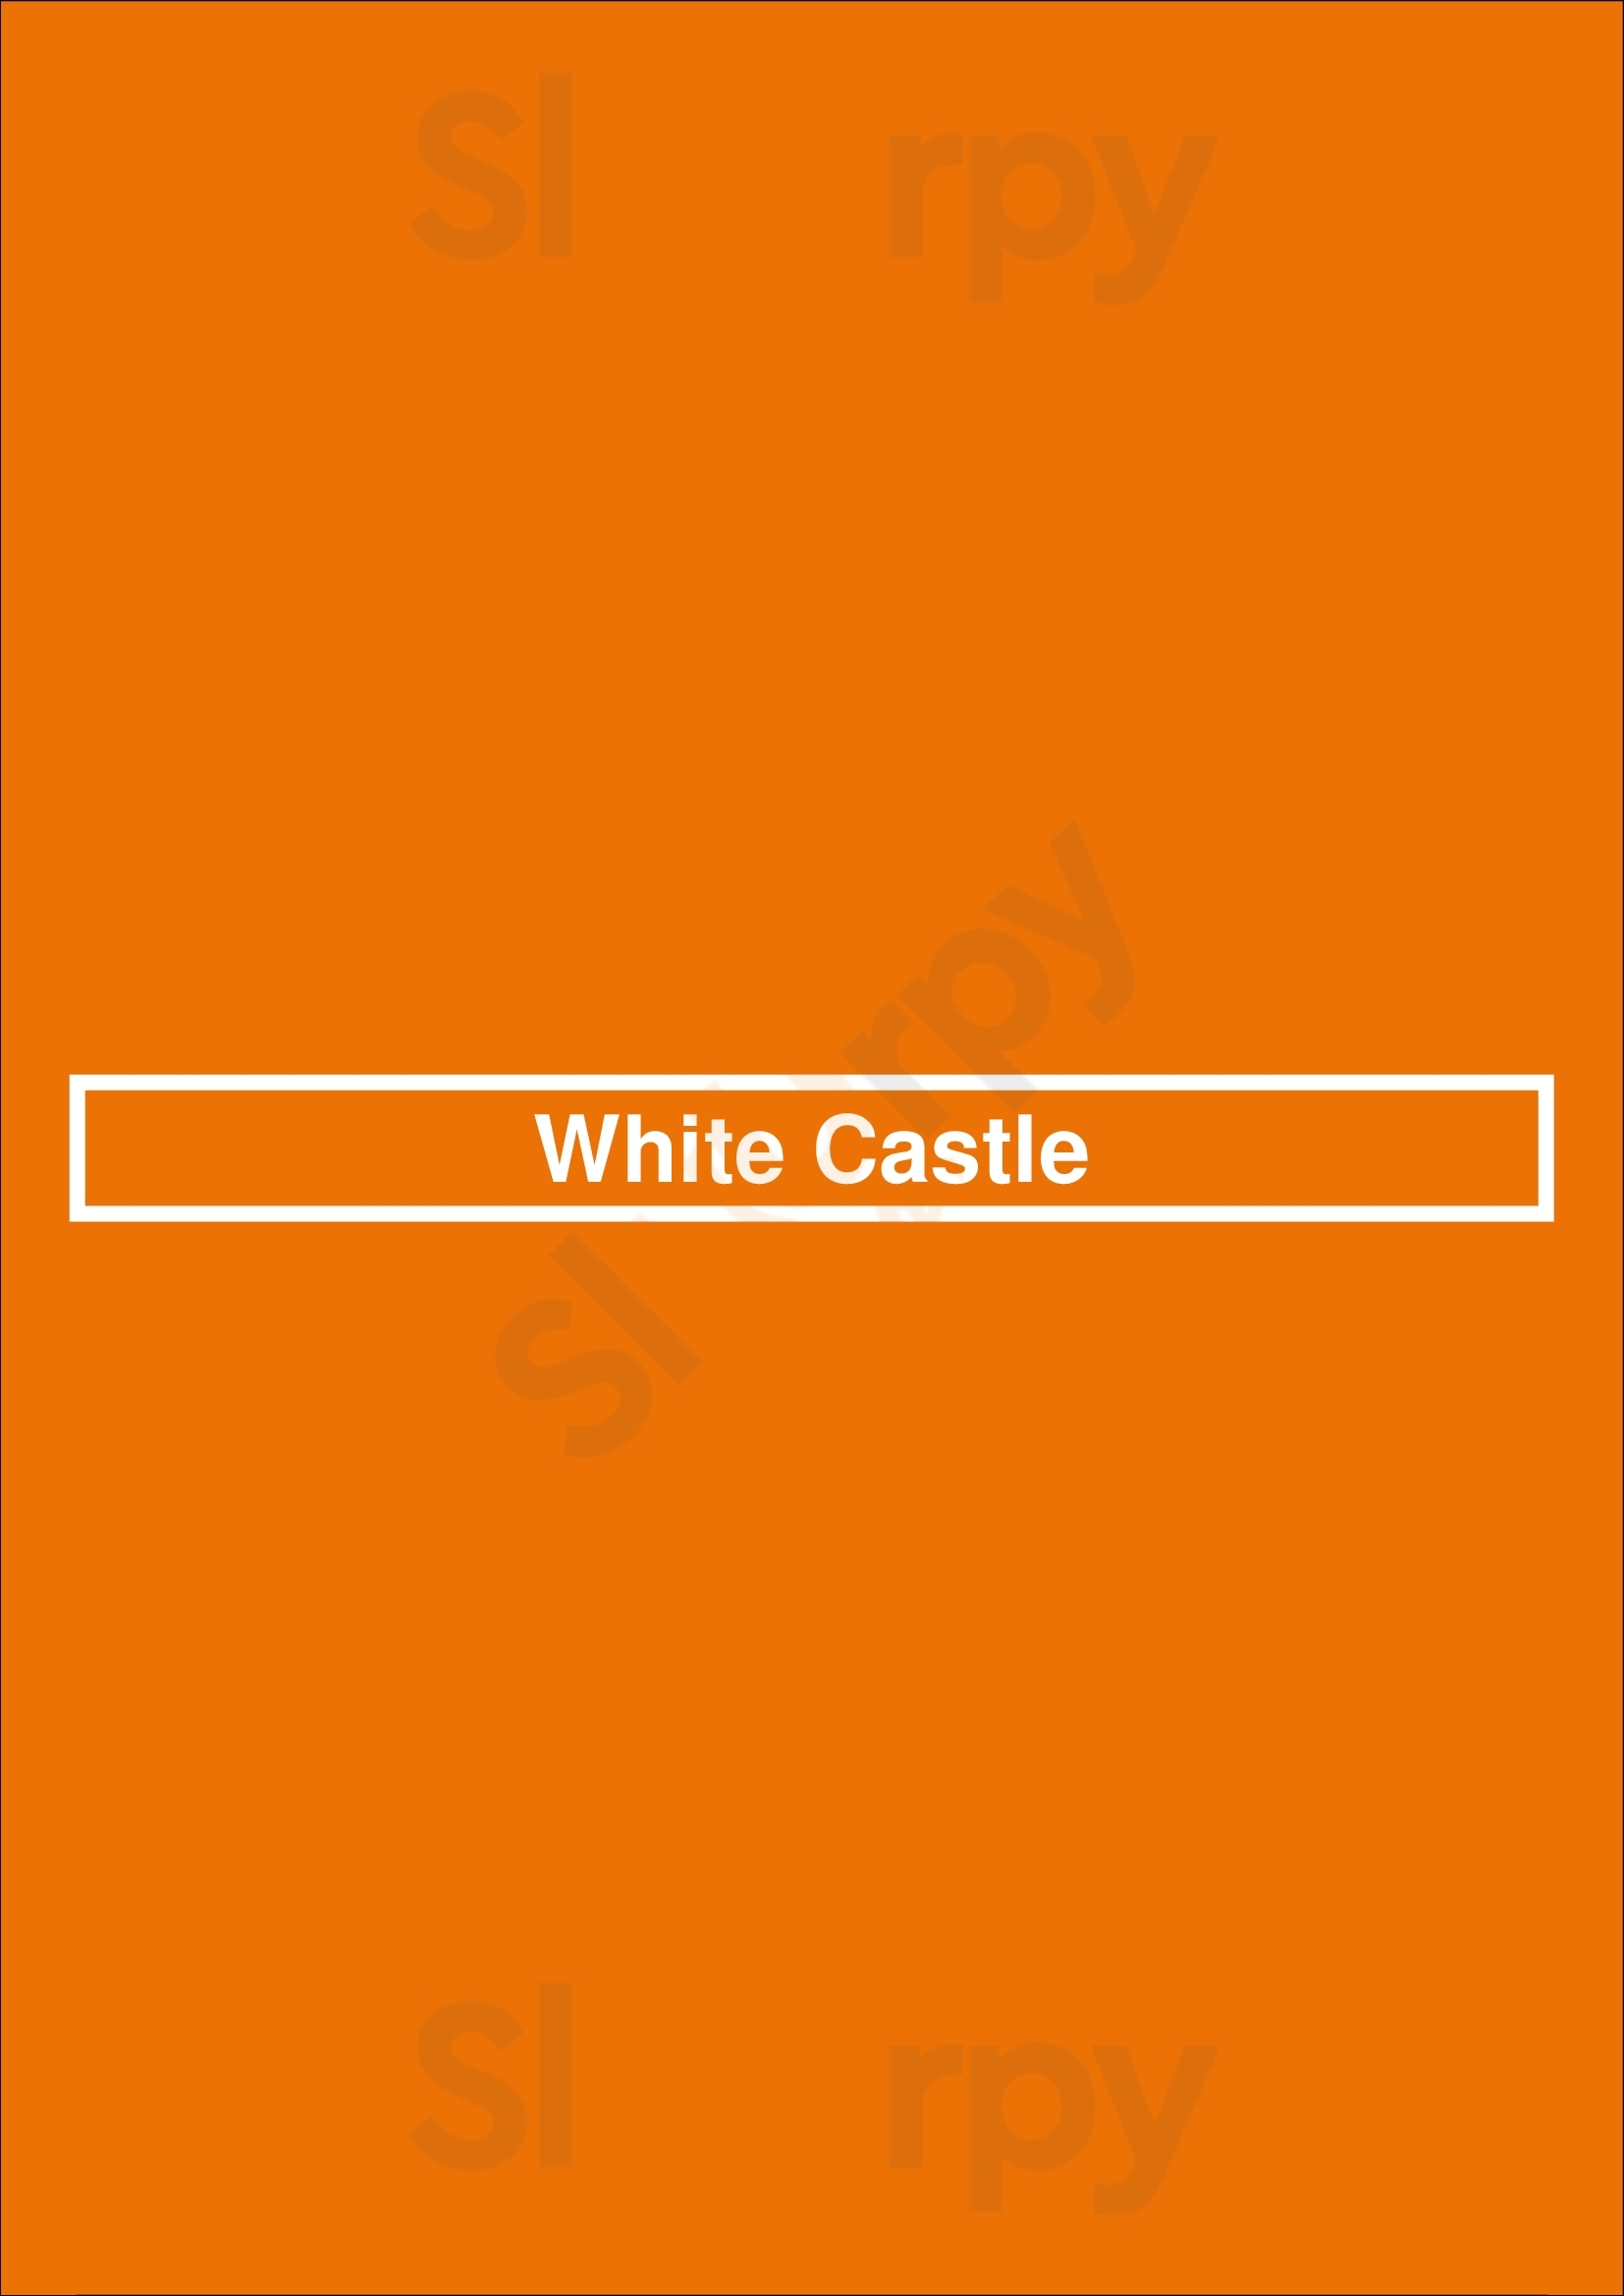 White Castle Minneapolis Menu - 1